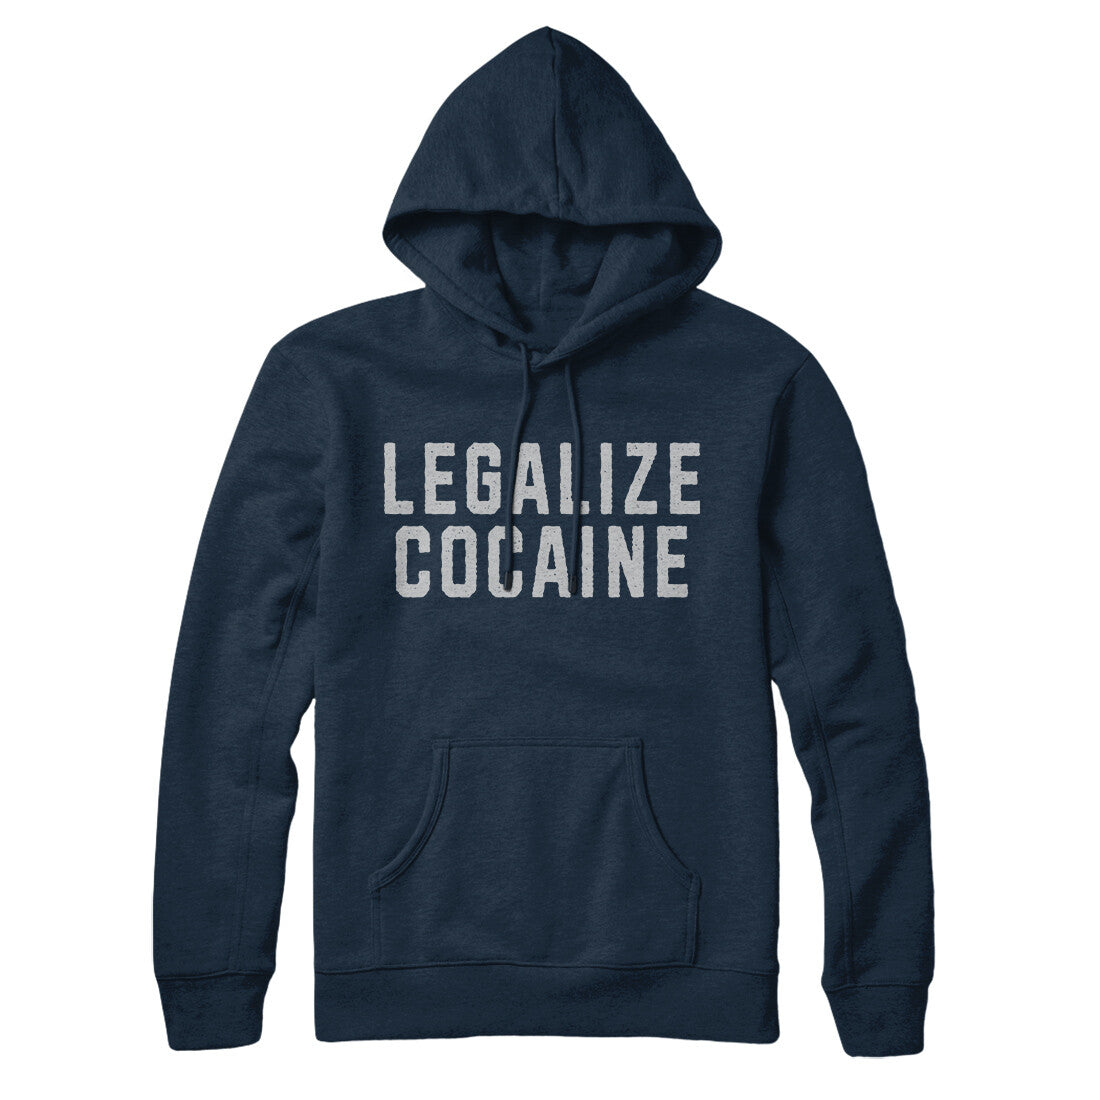 Legalize Cocaine in Navy Blue Color